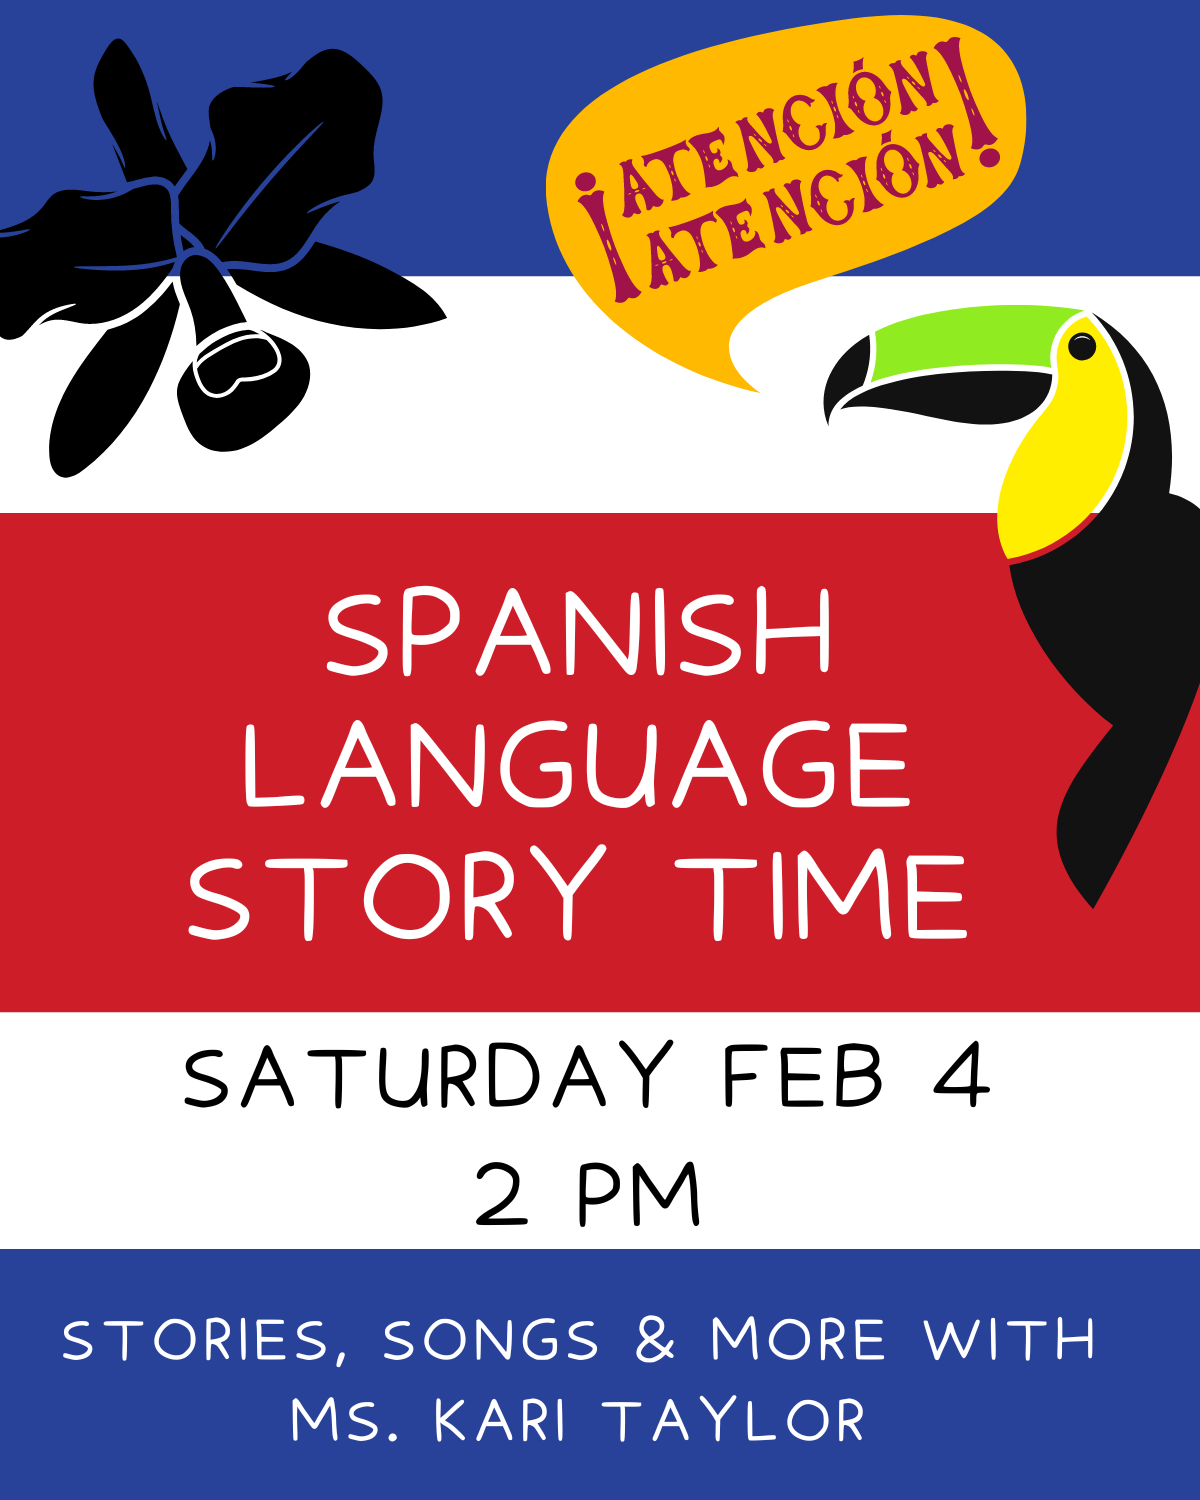 Spanish Language Story Time Saturday Feb 4 2 PM